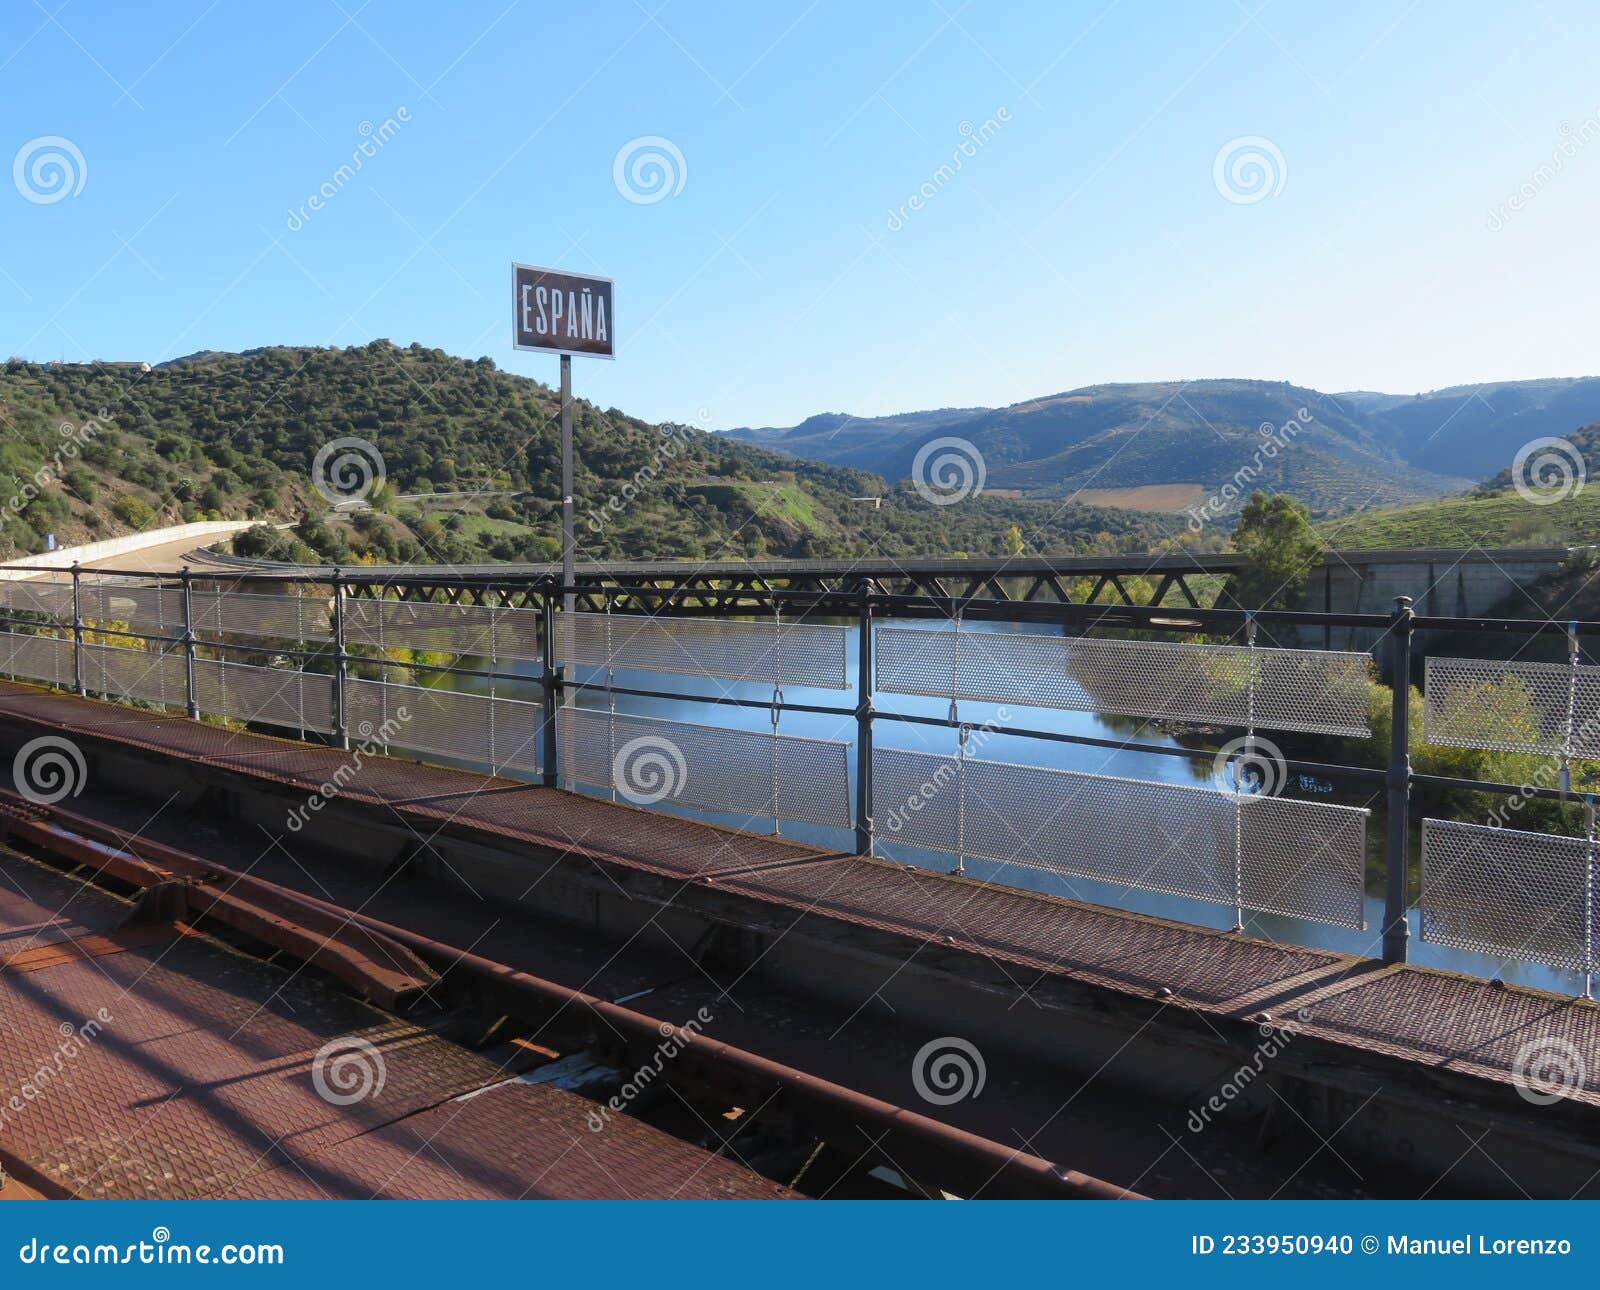 border between countries spain portugal by ic railway